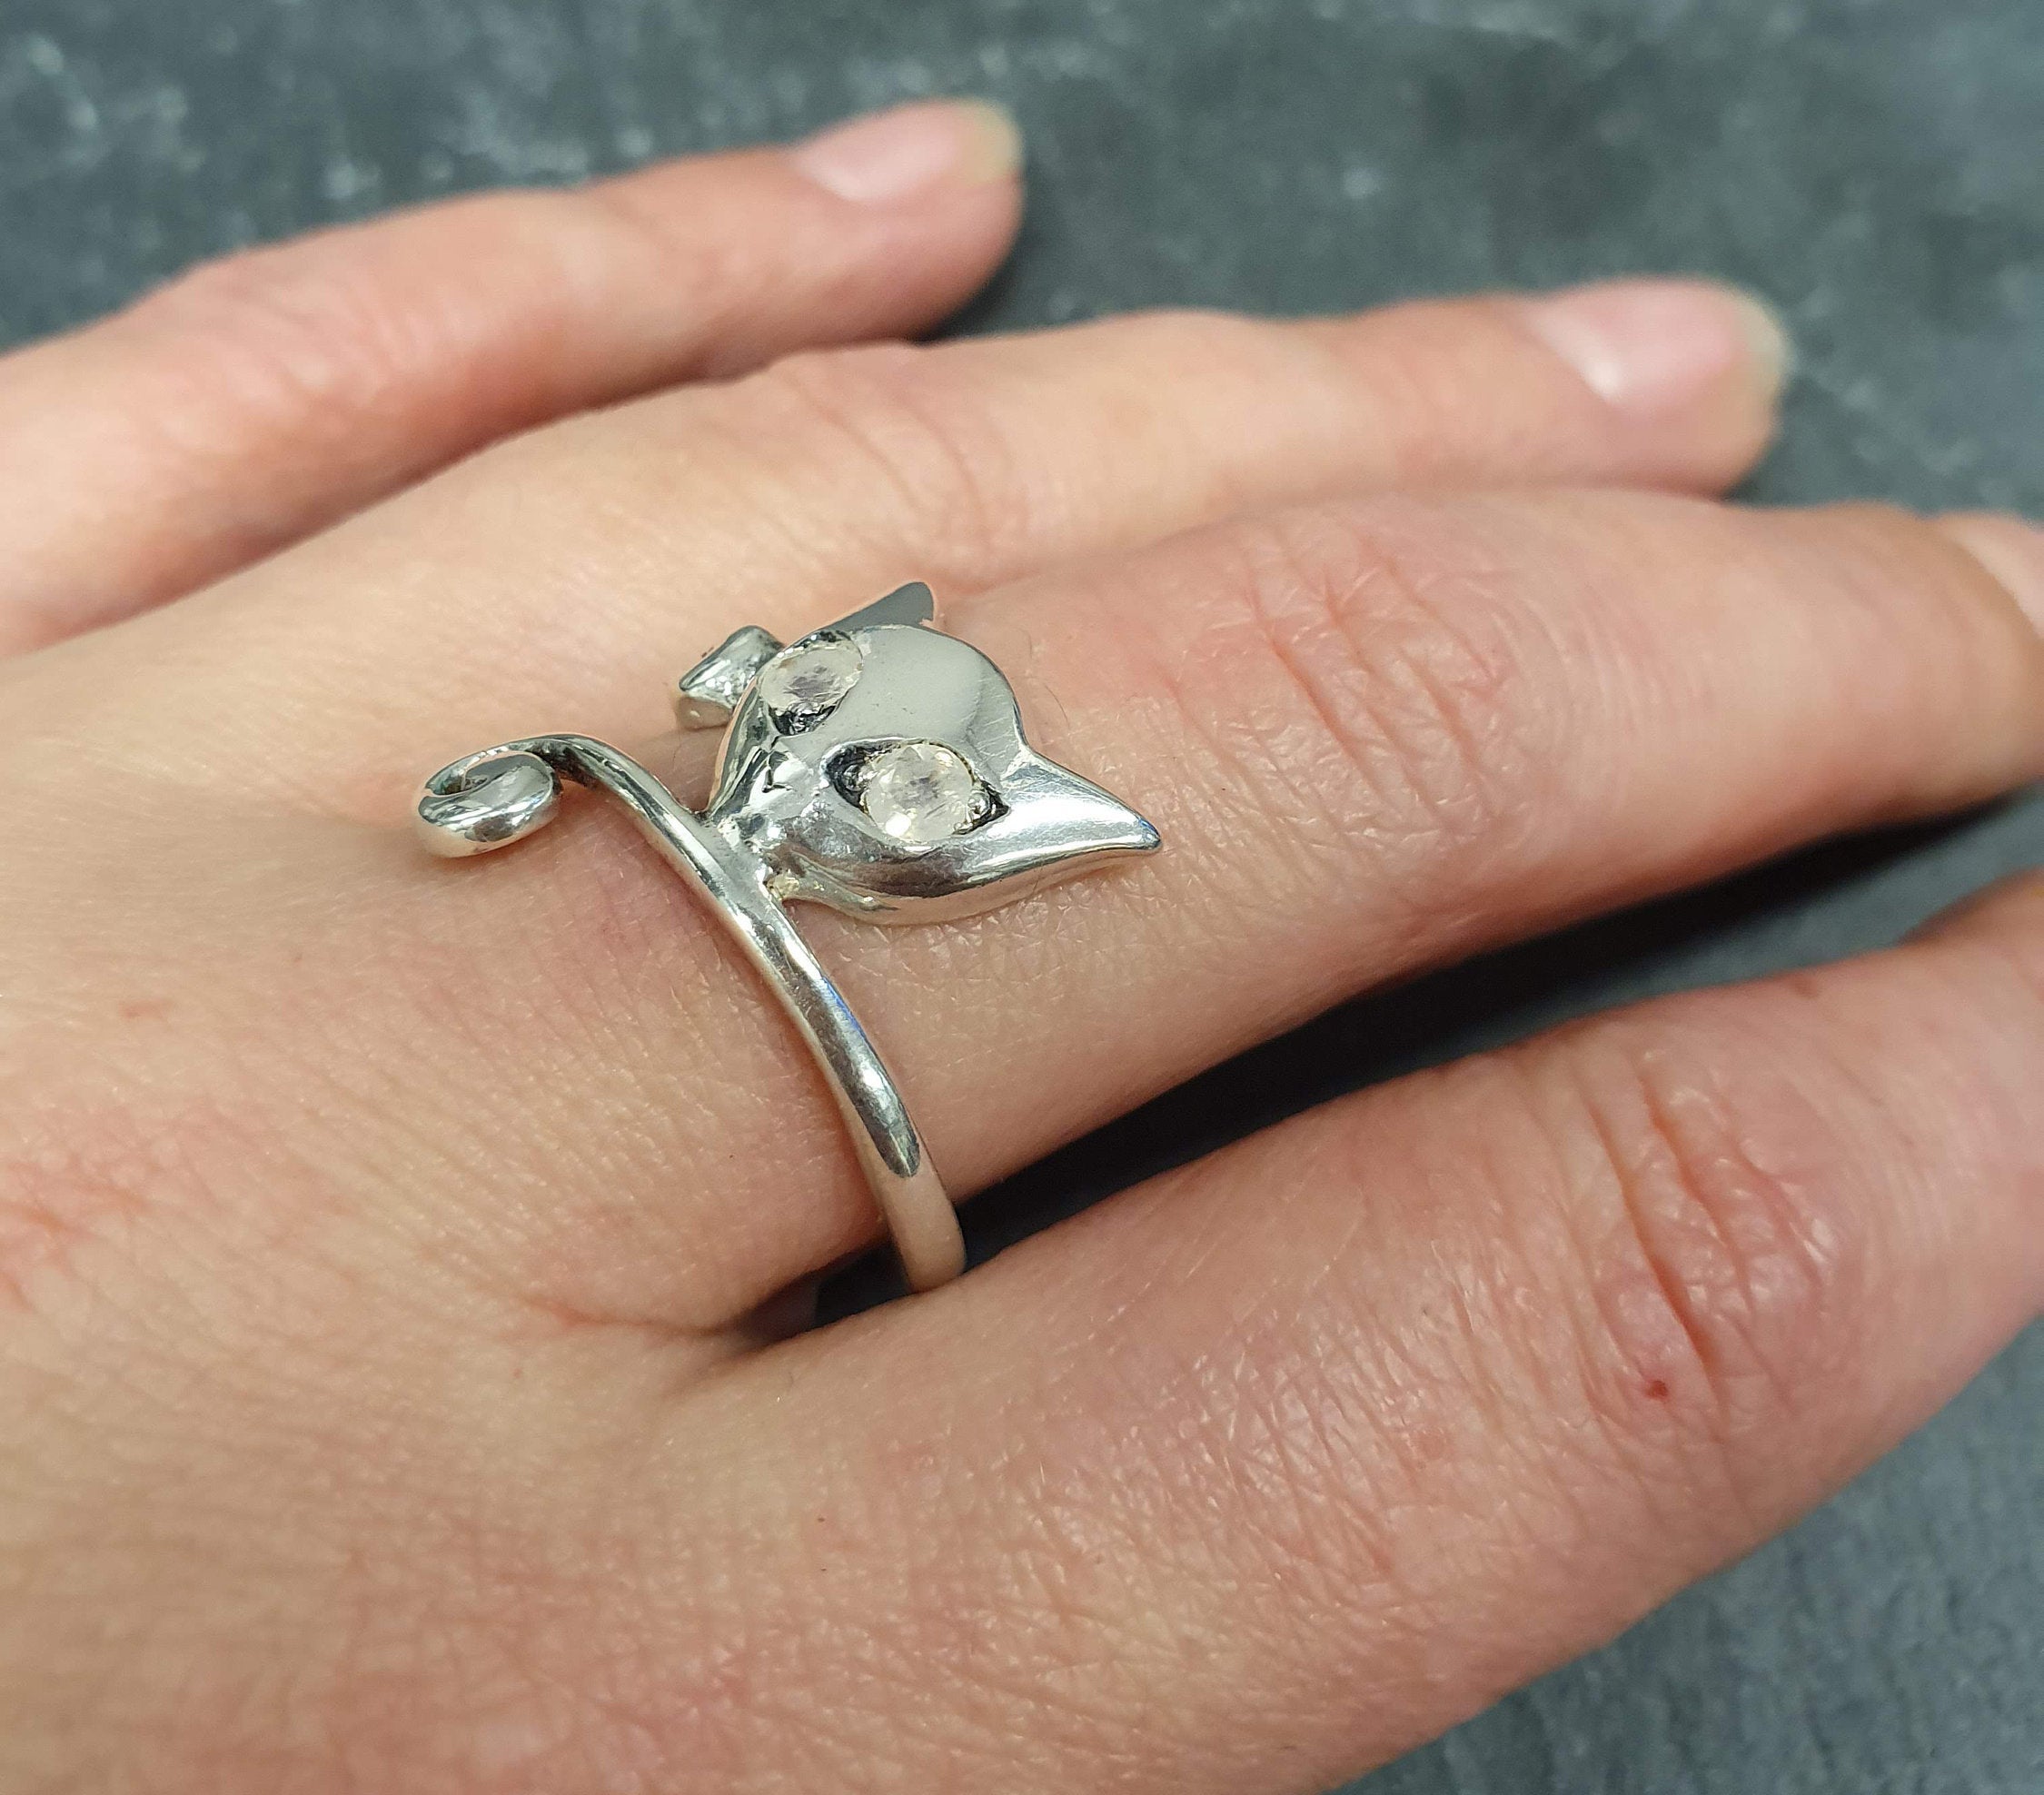 Silver Cat Ring, Natural Moonstone, Kitten Tail Ring, June Birthstone, Cute Cat Ring, Elegant Ring, Moonstone Cat Ring, Solid Silver Ring